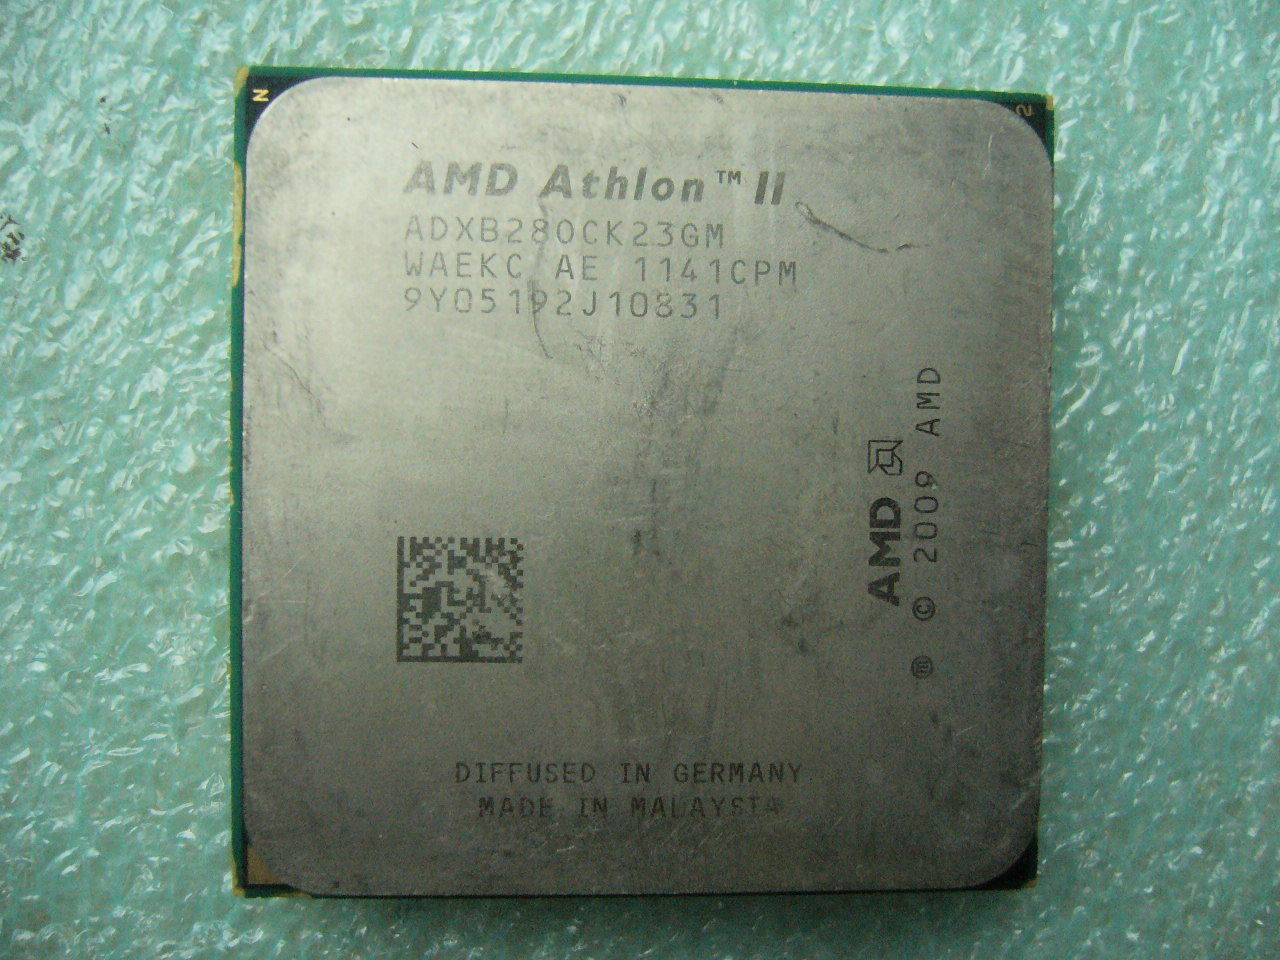 QTY 1x AMD Athlon II B28 3.4 GHz Dual-Core (ADXB28OCK23GM) CPU Socket AM3 - Click Image to Close